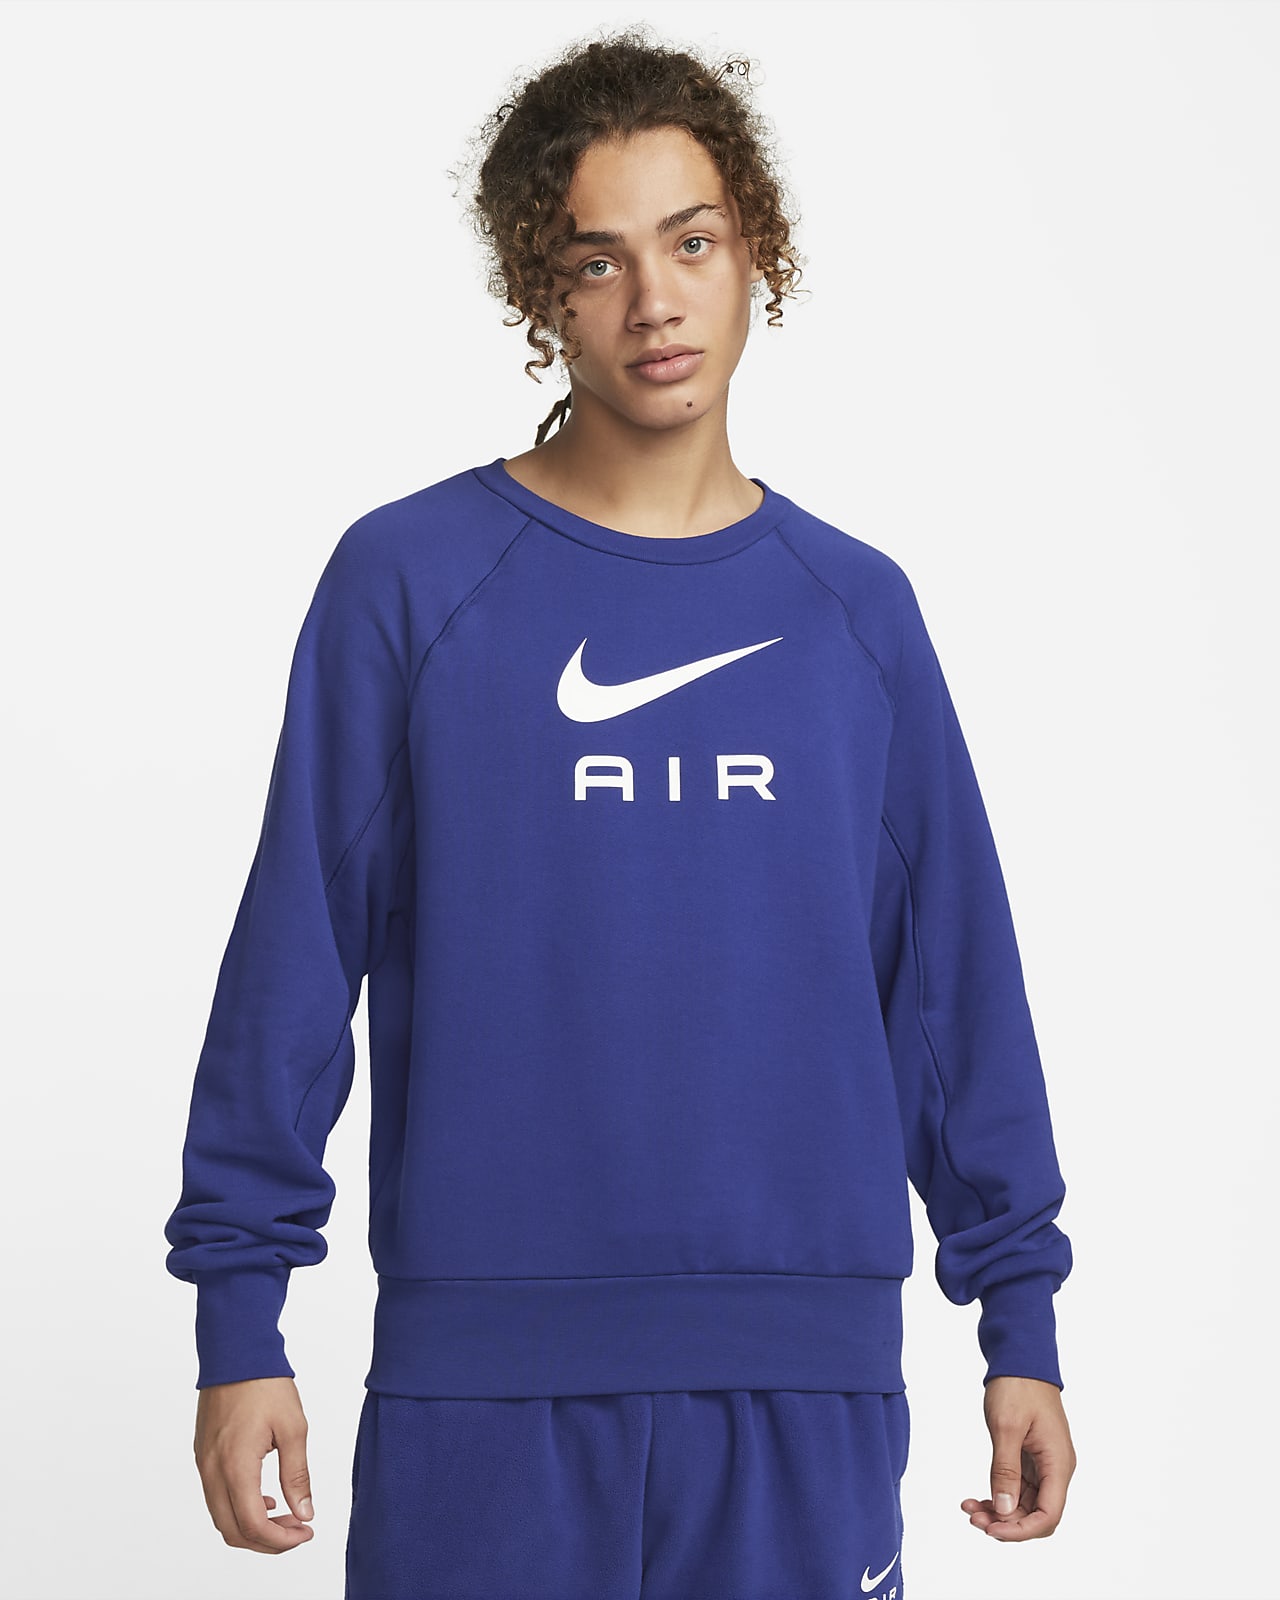 Nike Sportswear Air Men's French Terry Crew